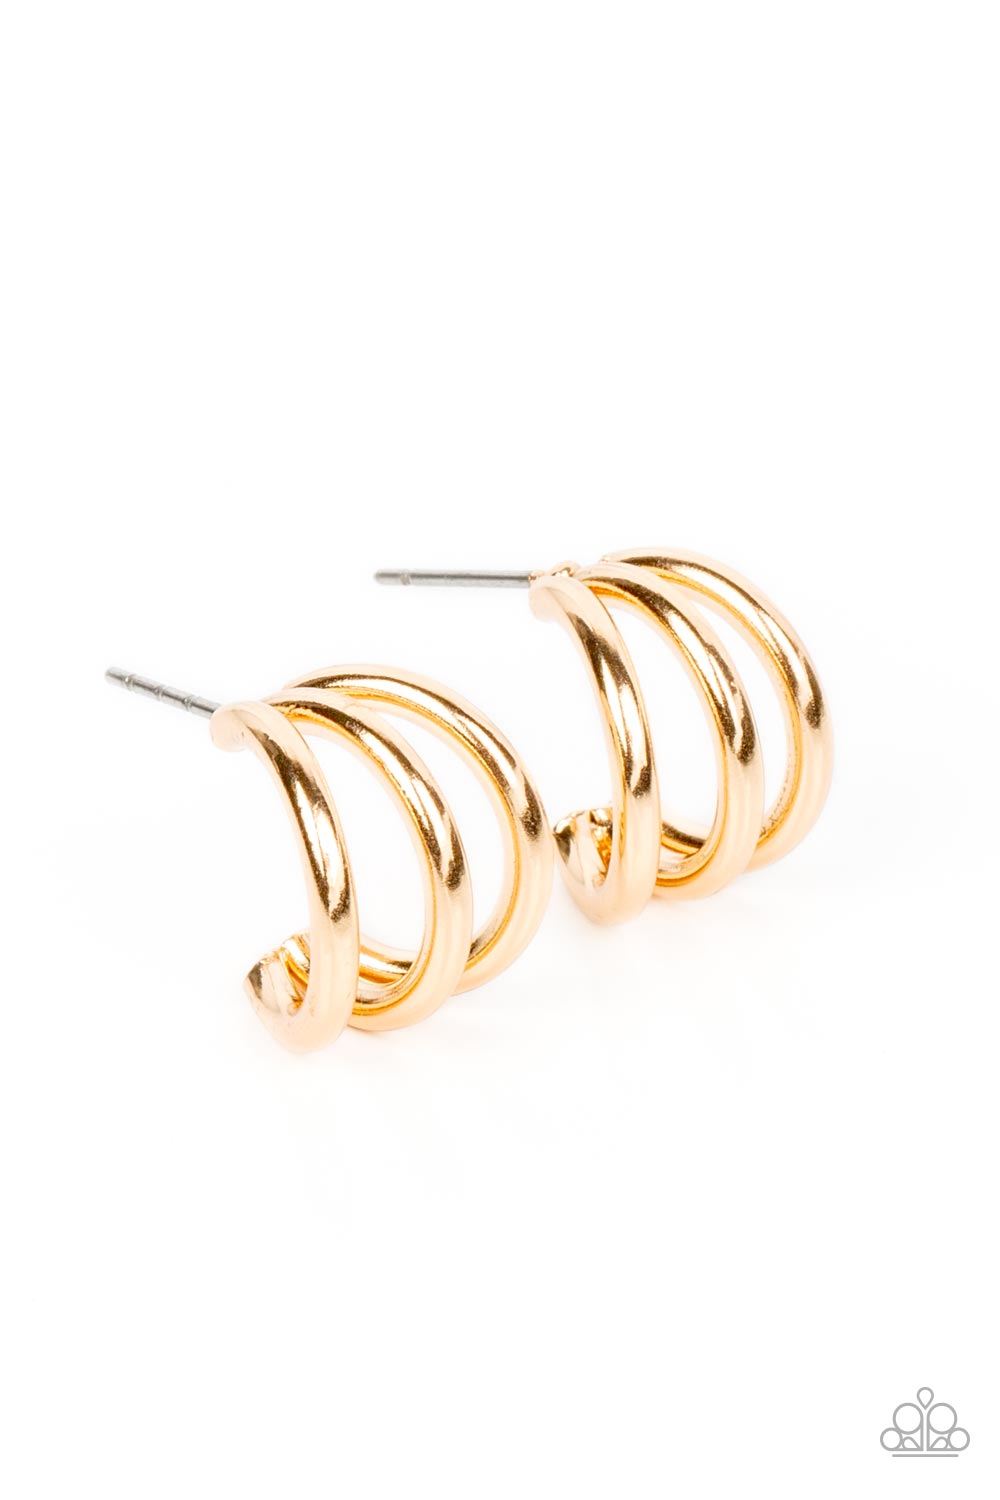 TRIPLE Down Gold Mini Hoop Earrings - Paparazzi Accessories- lightbox - CarasShop.com - $5 Jewelry by Cara Jewels